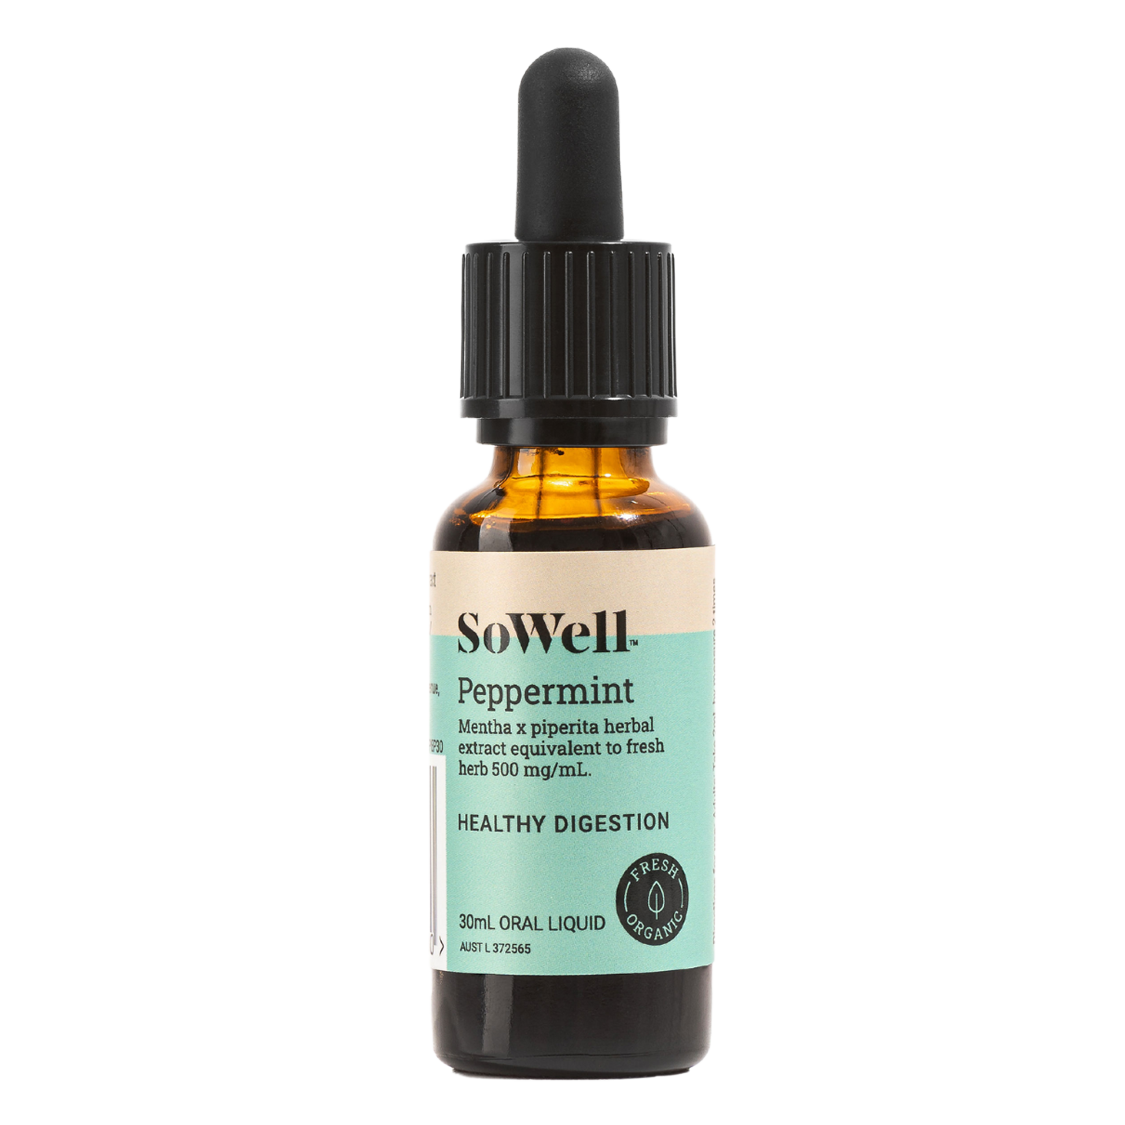 A 30ml dropper bottle of SoWell Peppermint Tincture liquid